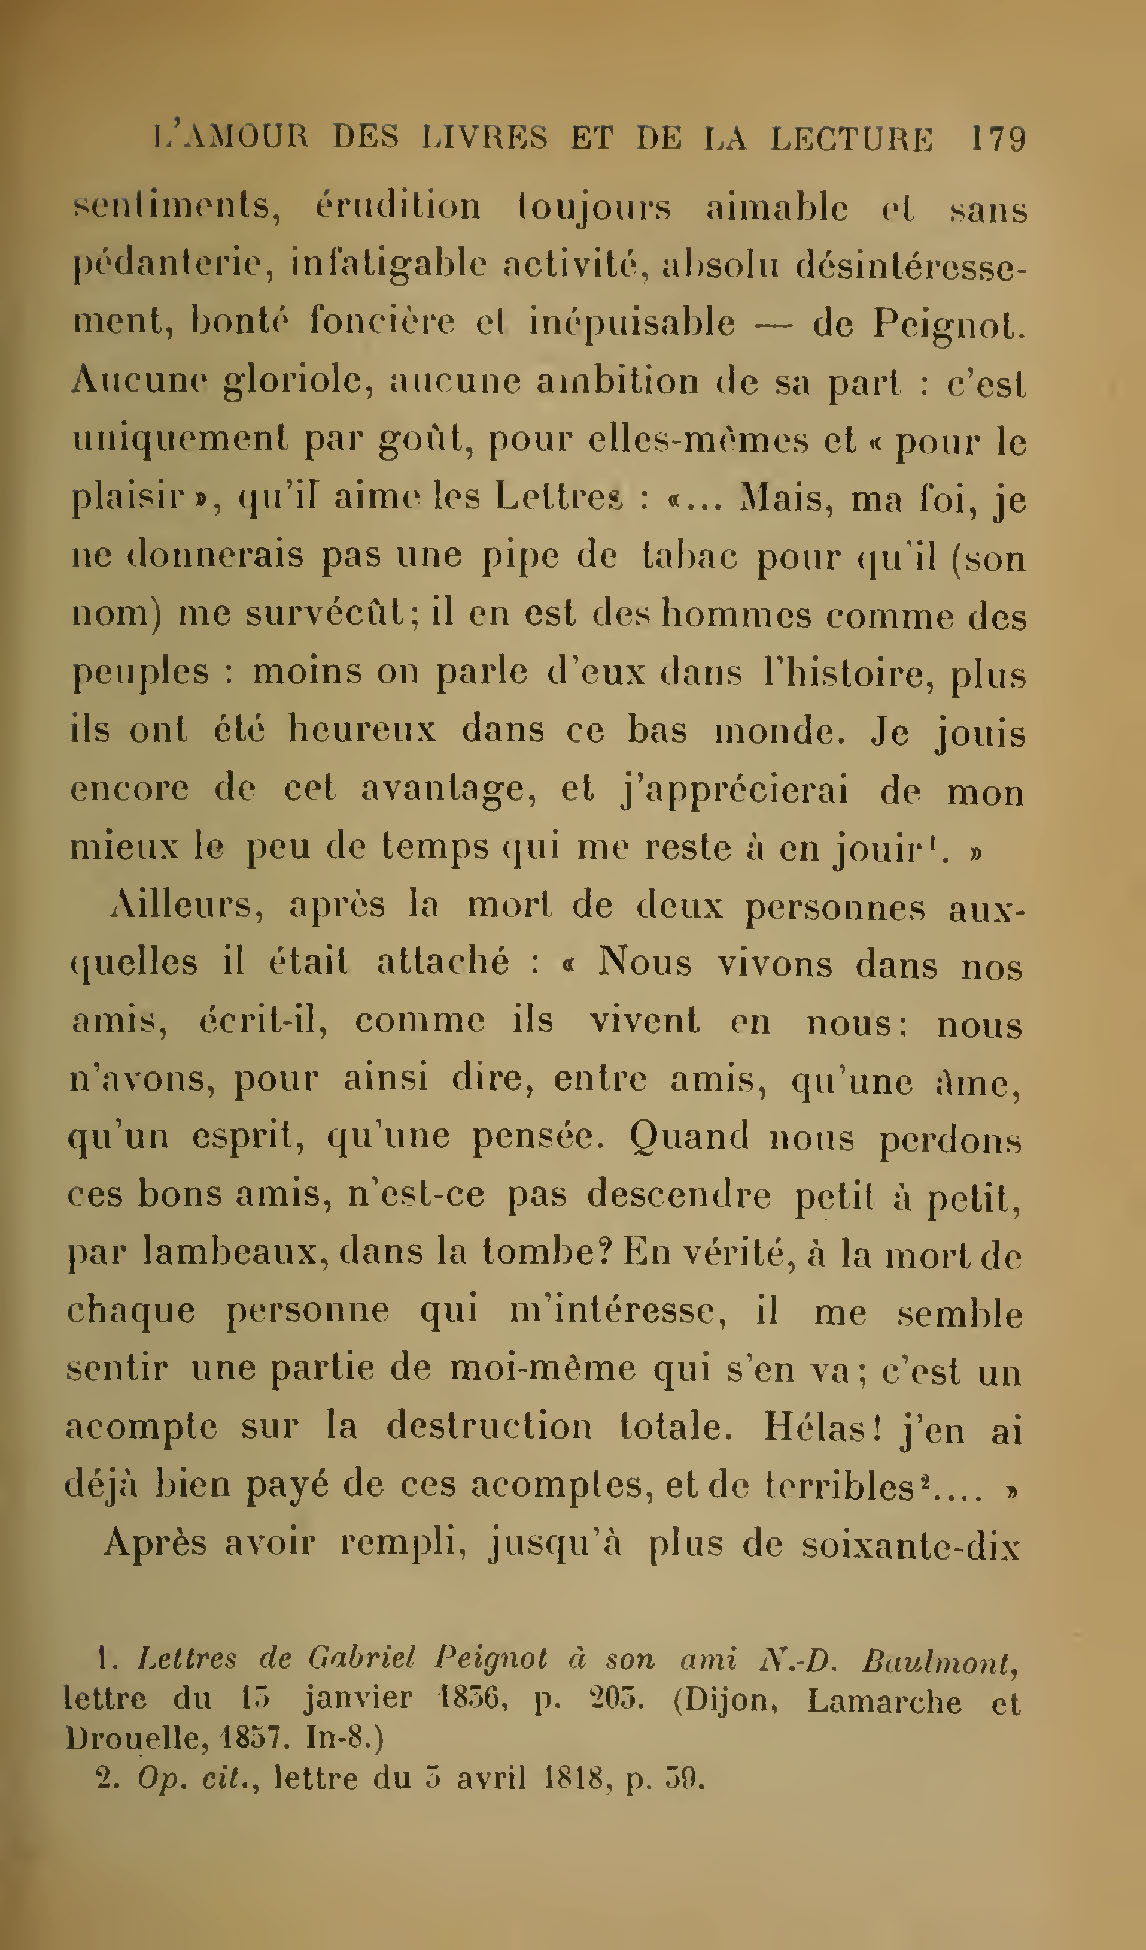 Albert Cim, Le Livre, t. I, p. 179.